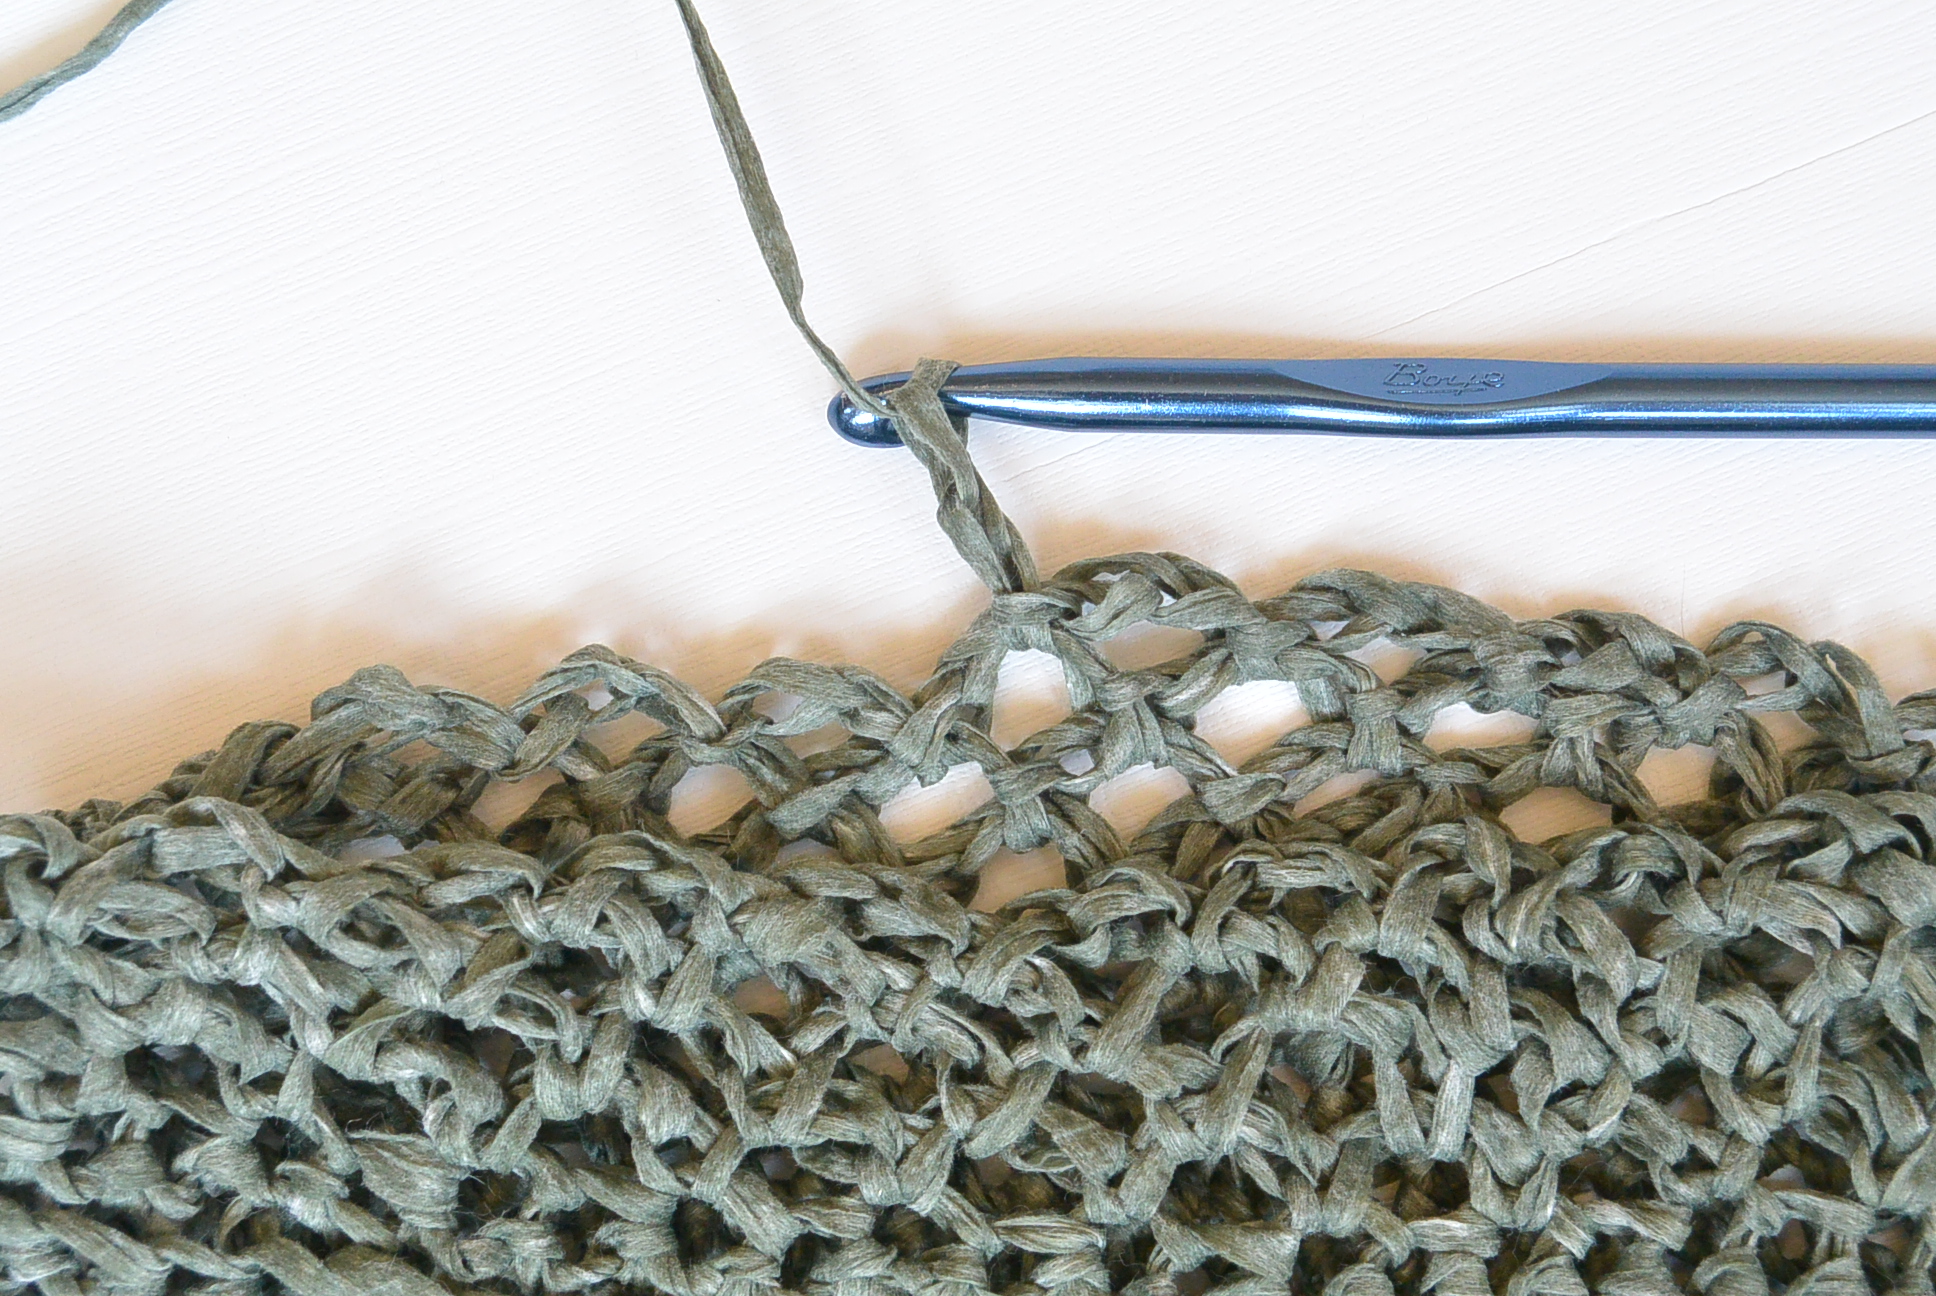 Bistitchual  Natural Tote Bag – Mae Crochets